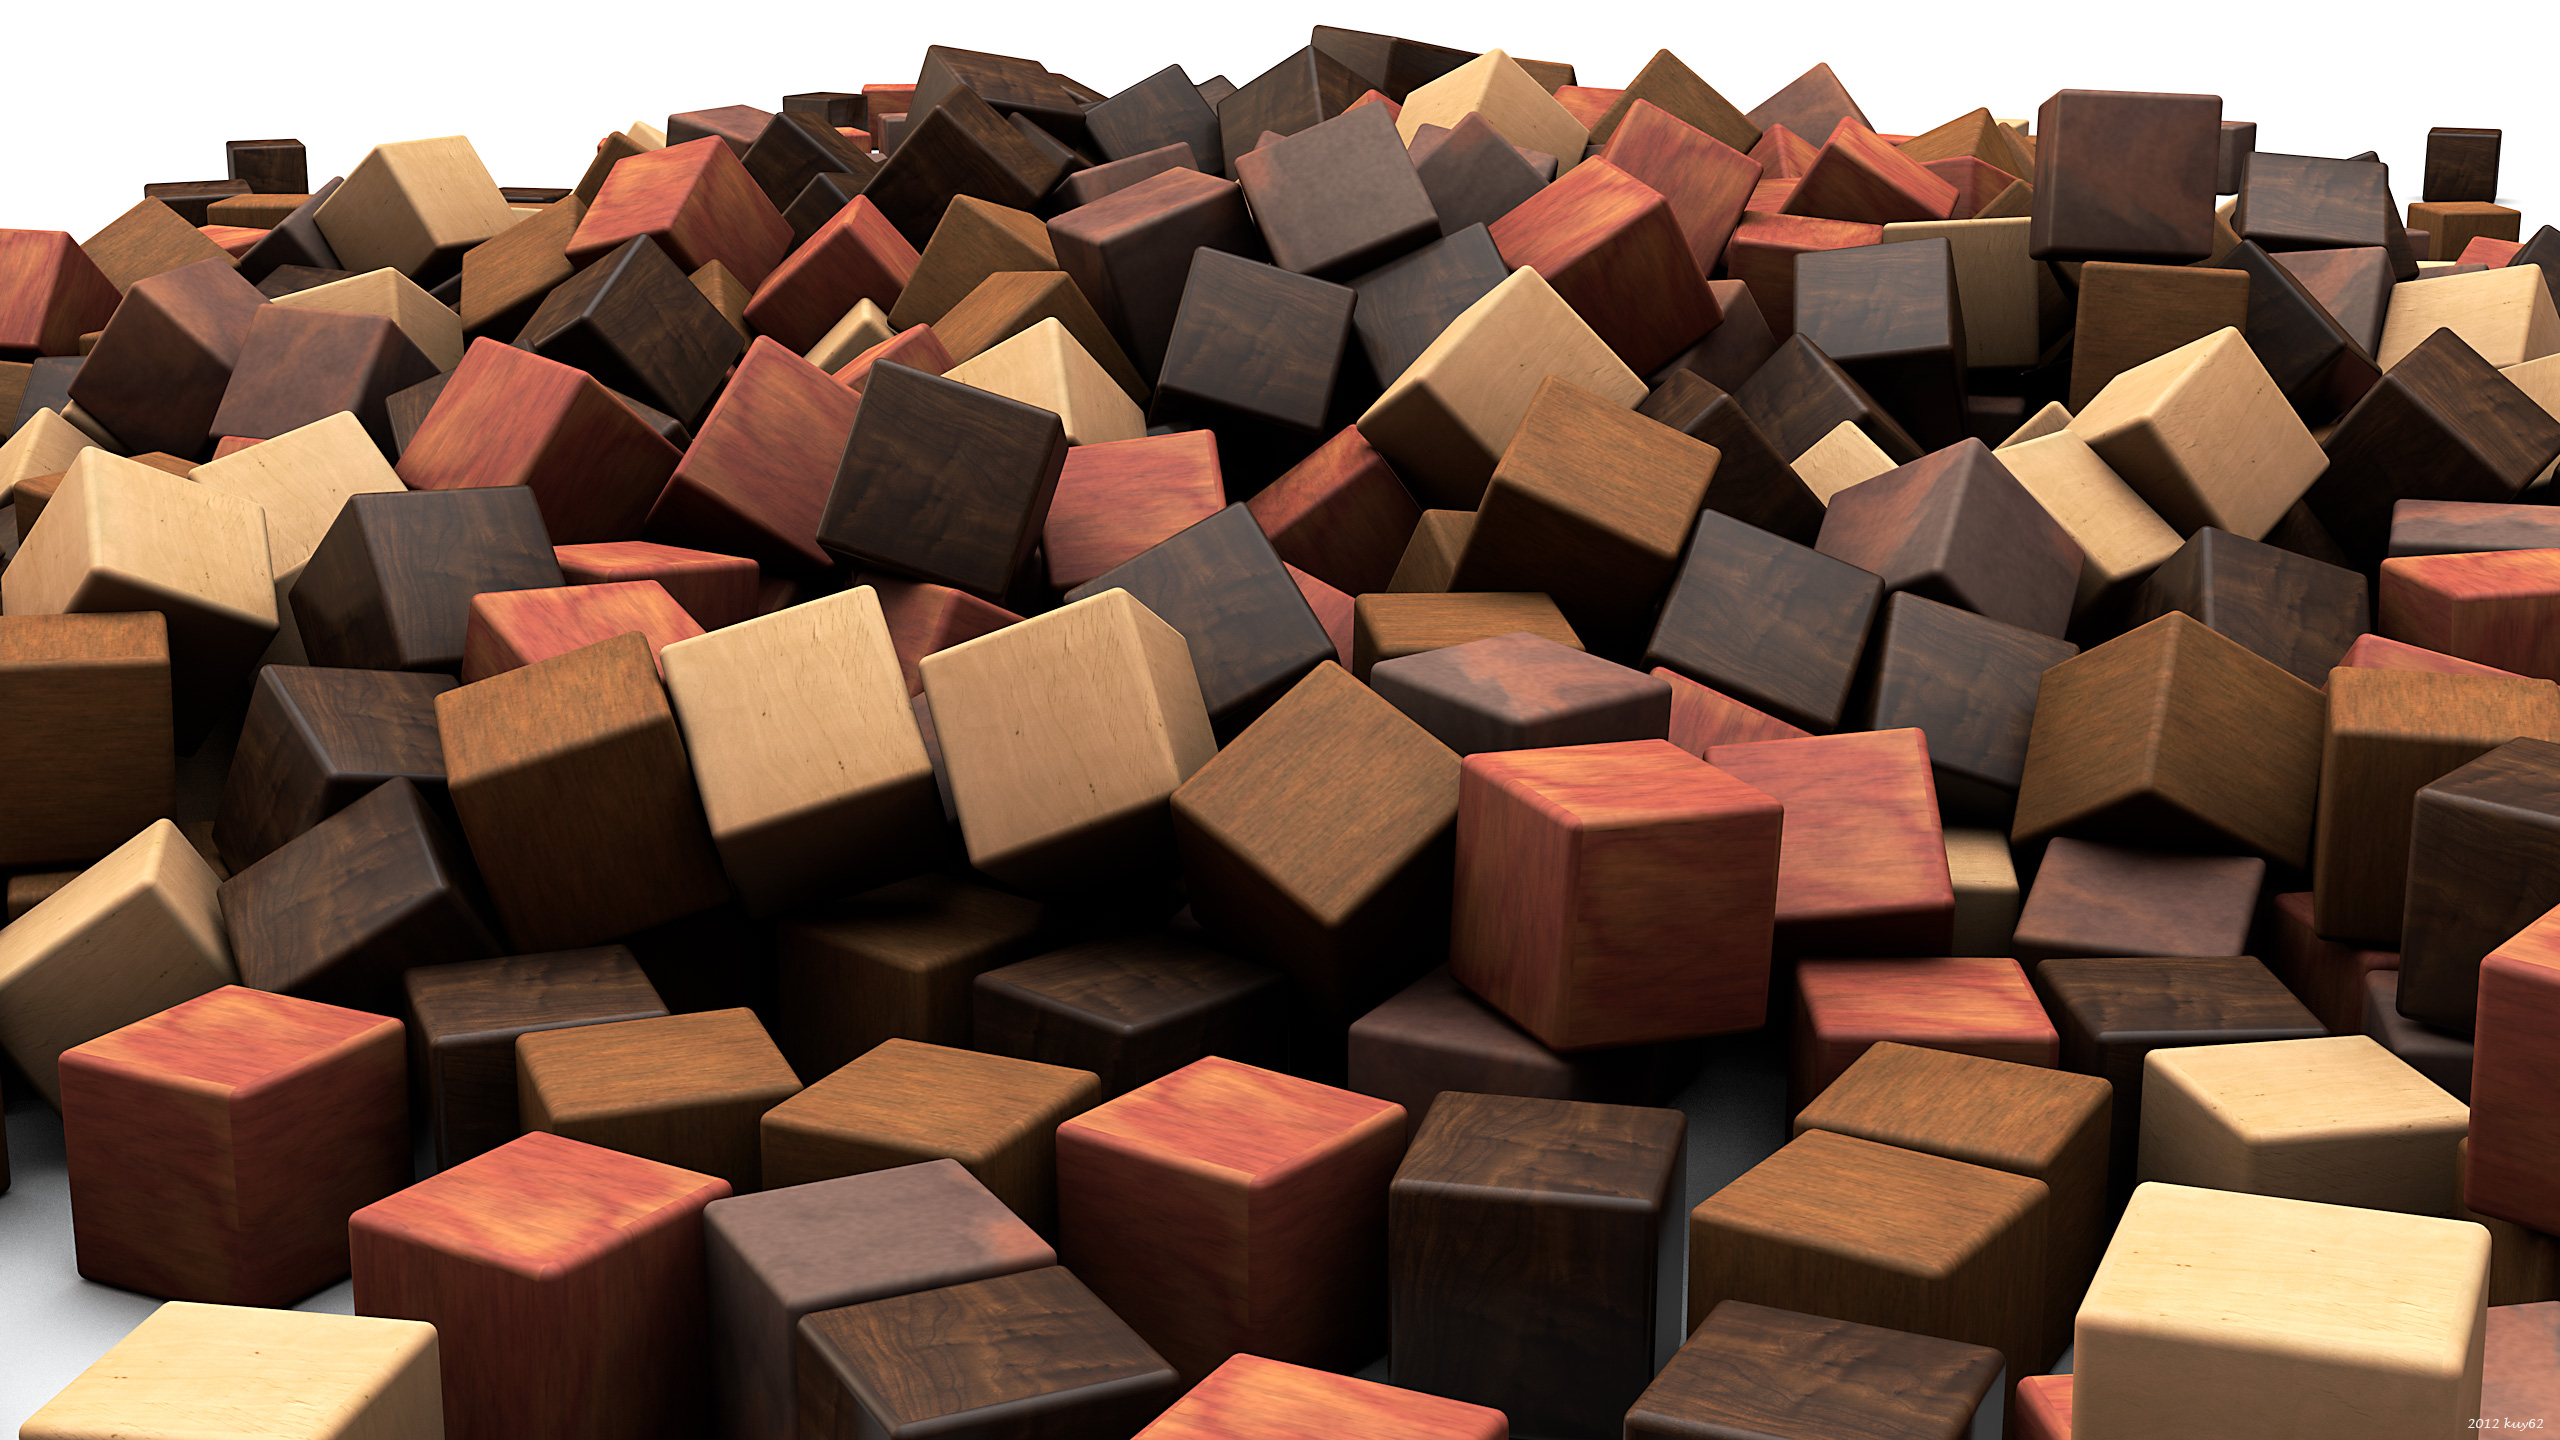 Stack objects. Много кубиков. Кубики "абстракция". 3д кубик. Куча деревянных кубиков.